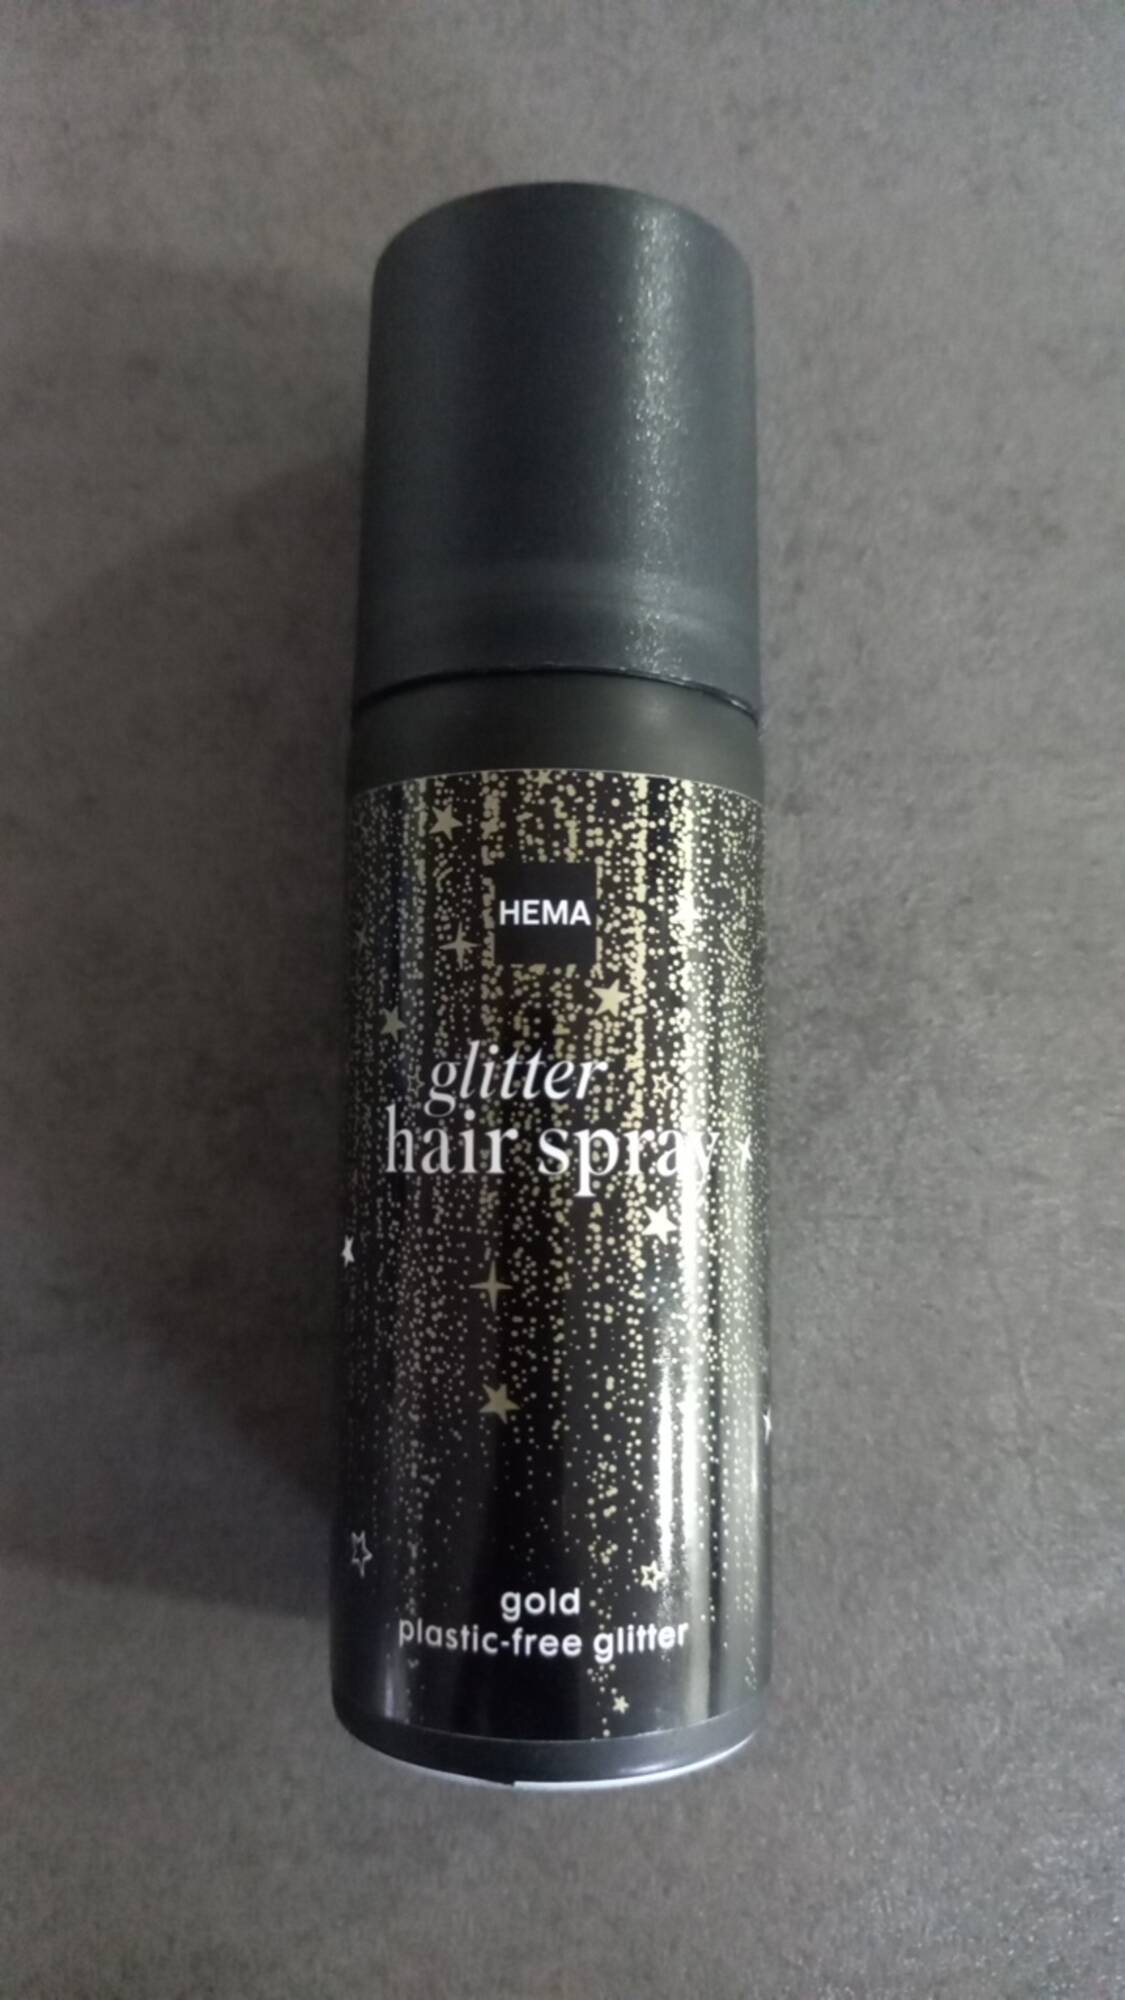 HEMA - Glitter hair spray